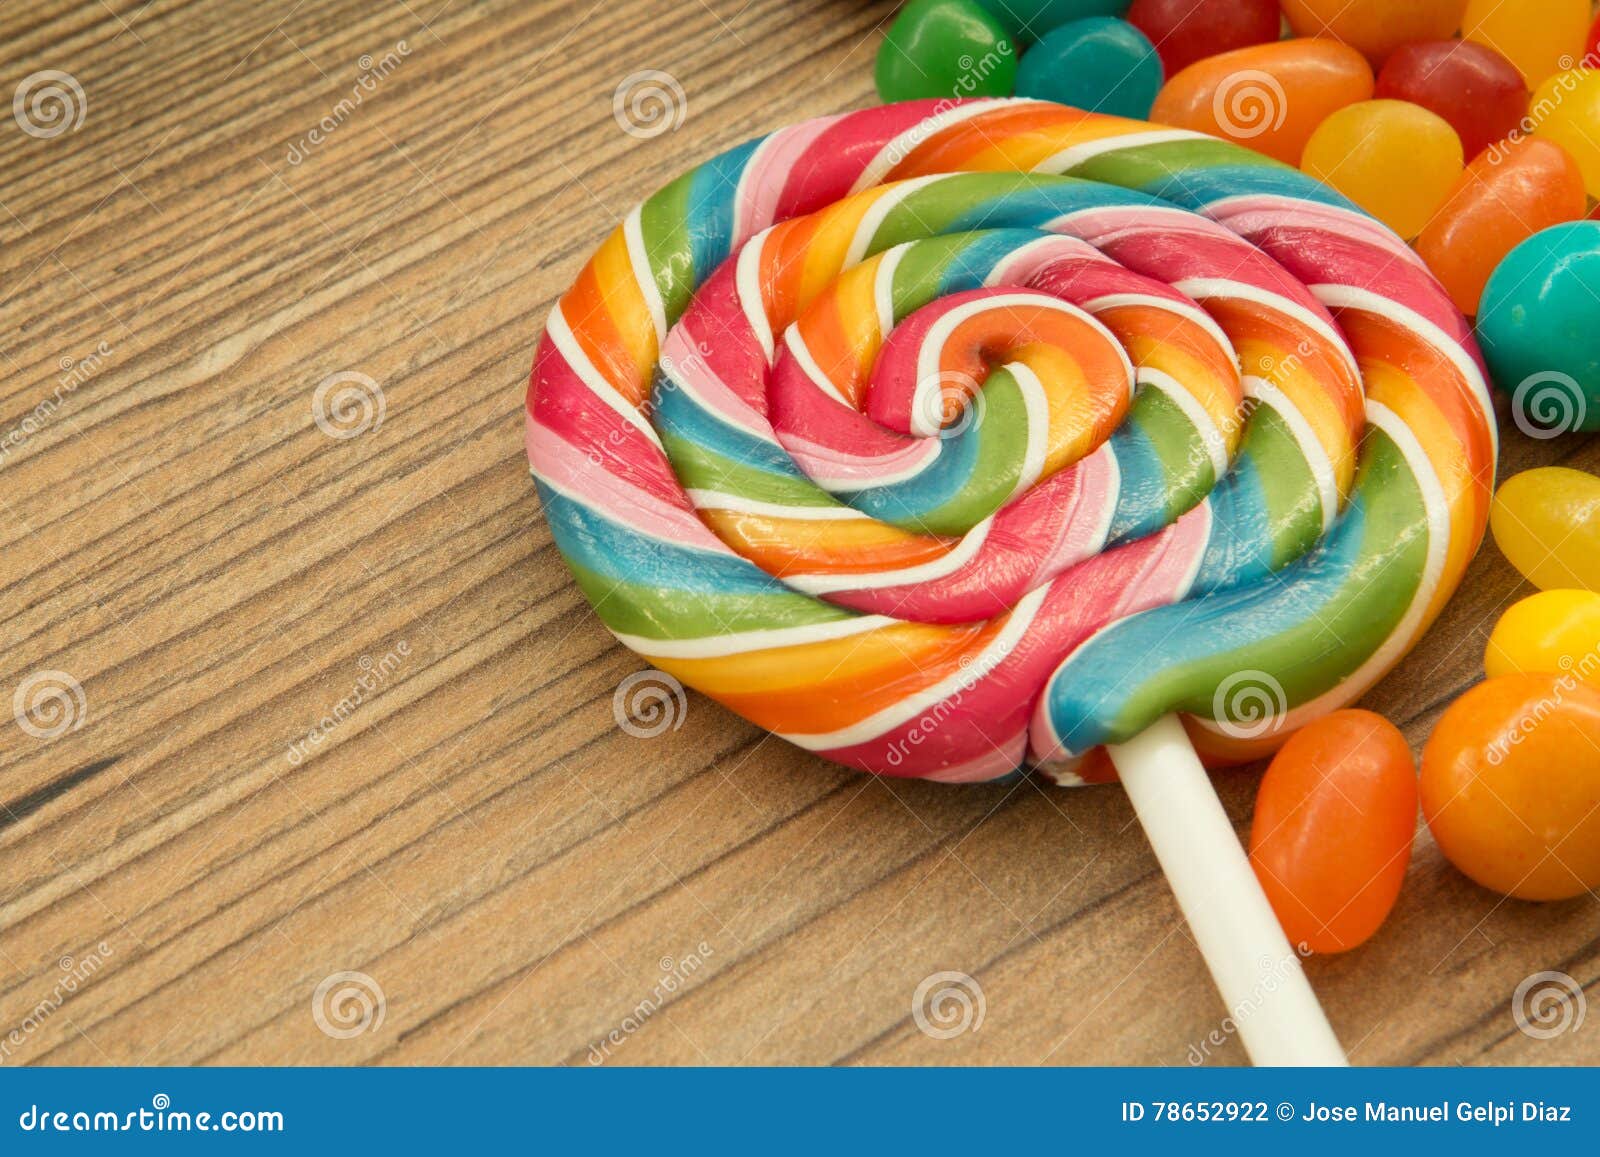 Wallpaper ID 297797  Food Candy Phone Wallpaper Lollipop Sweets  1644x3840 free download